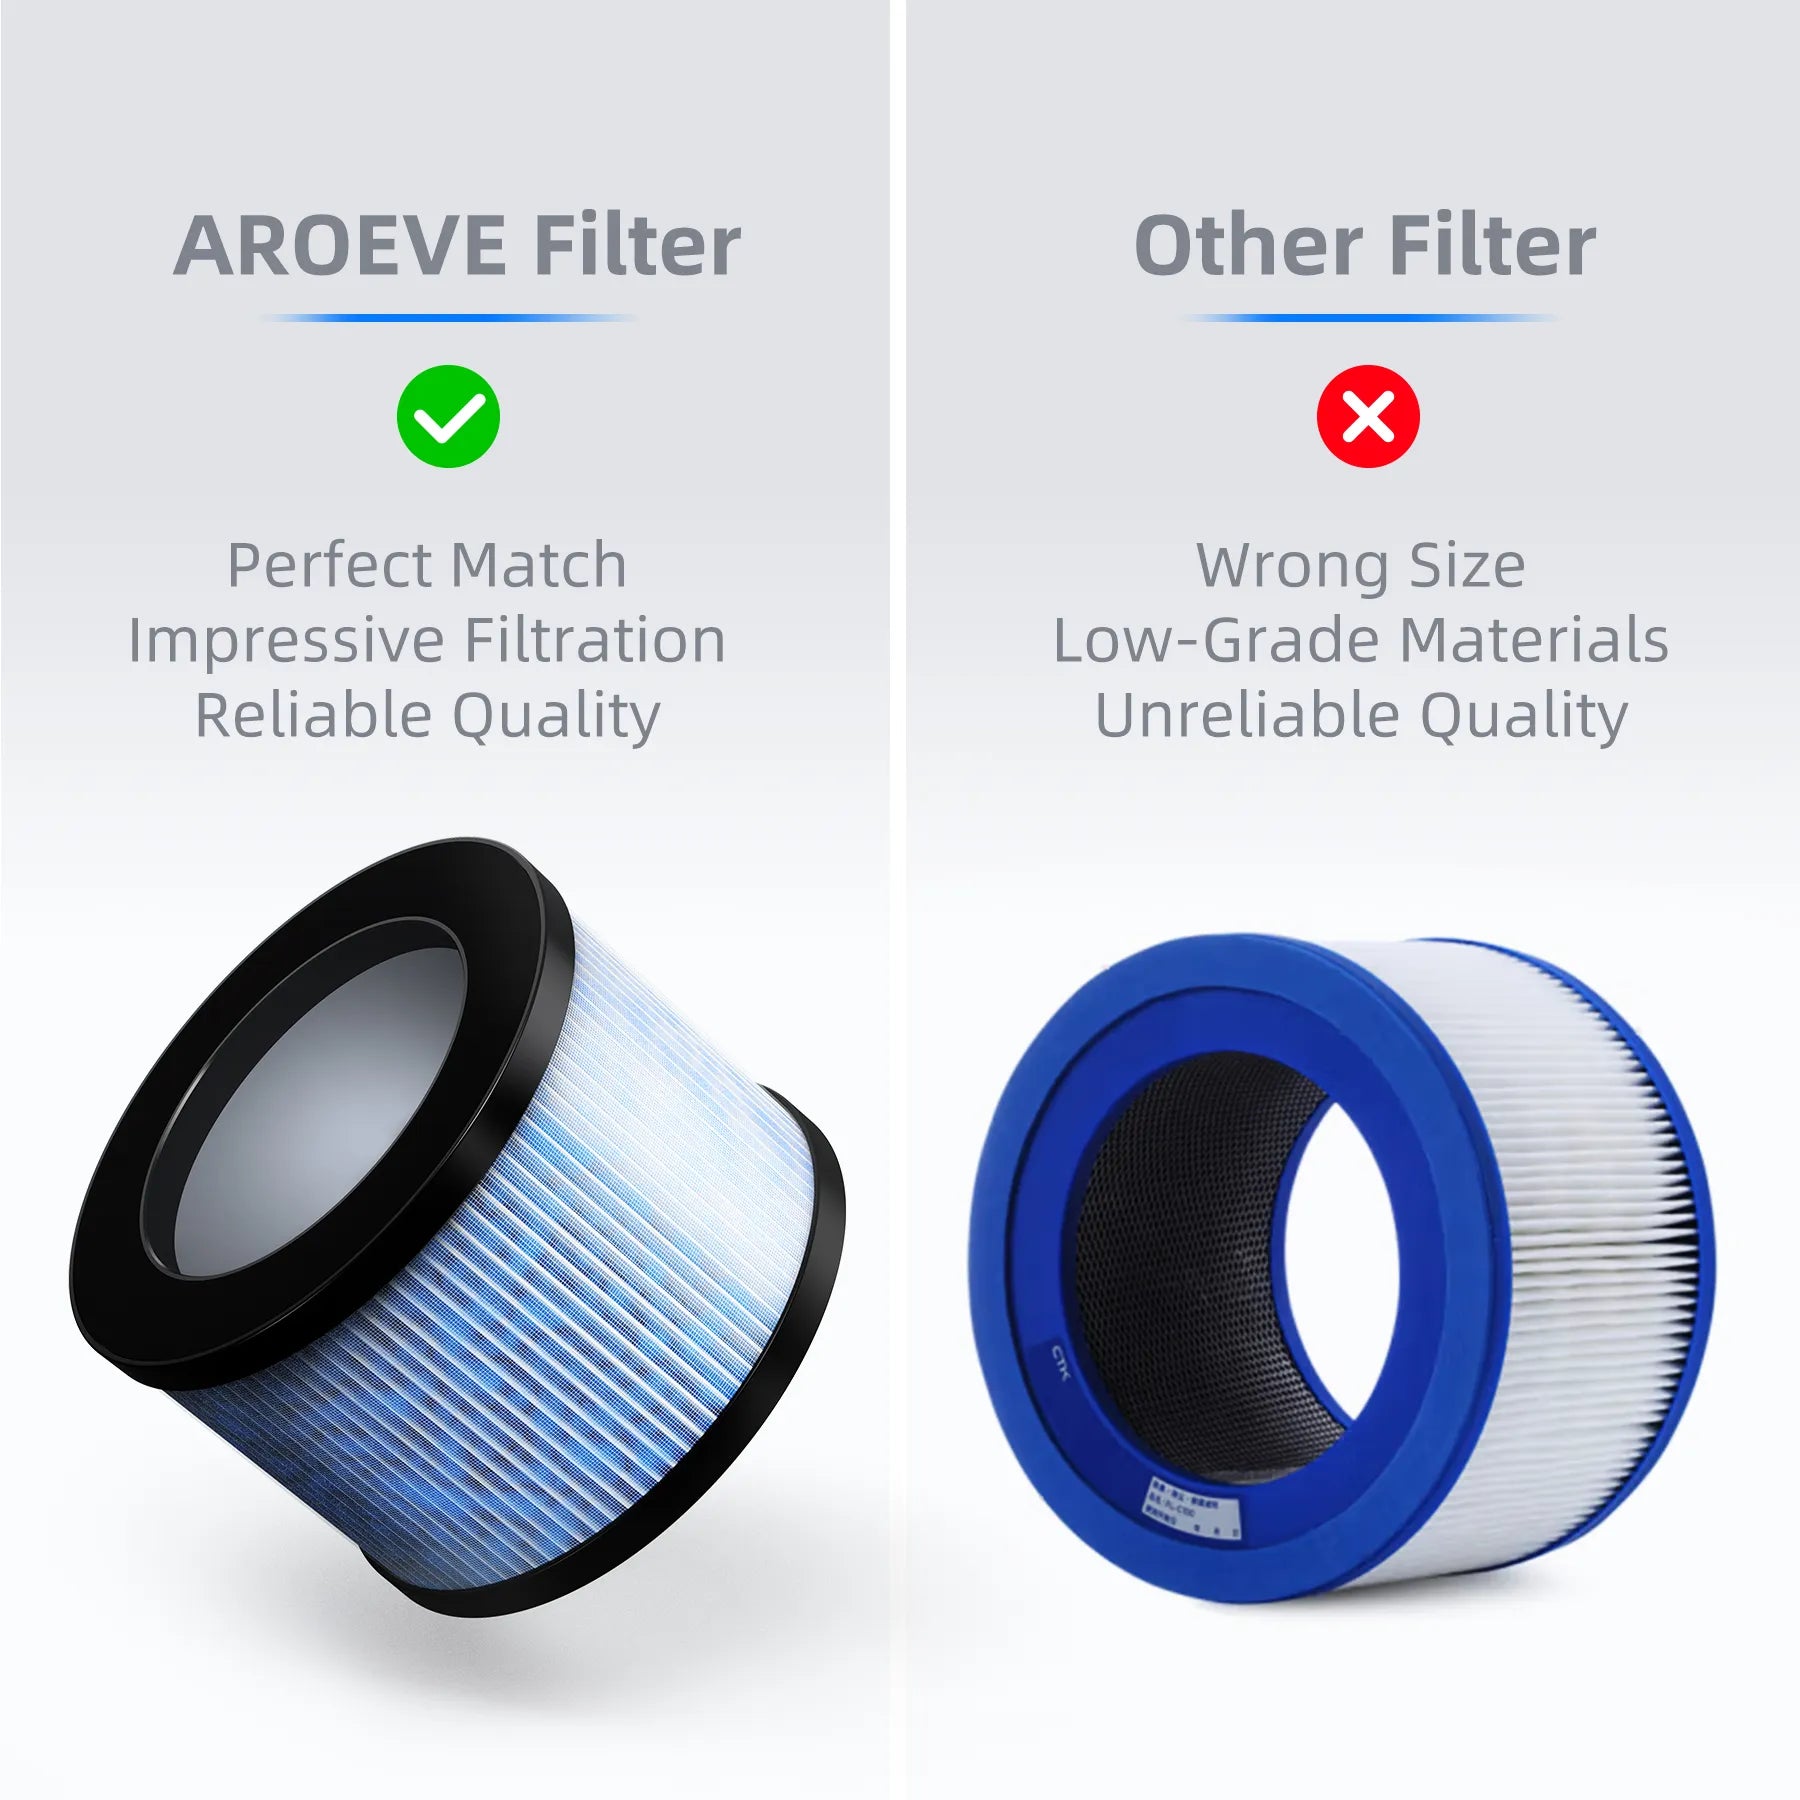 AROEVE Air Filter Replacement | MK01 & MK06- Standard Version